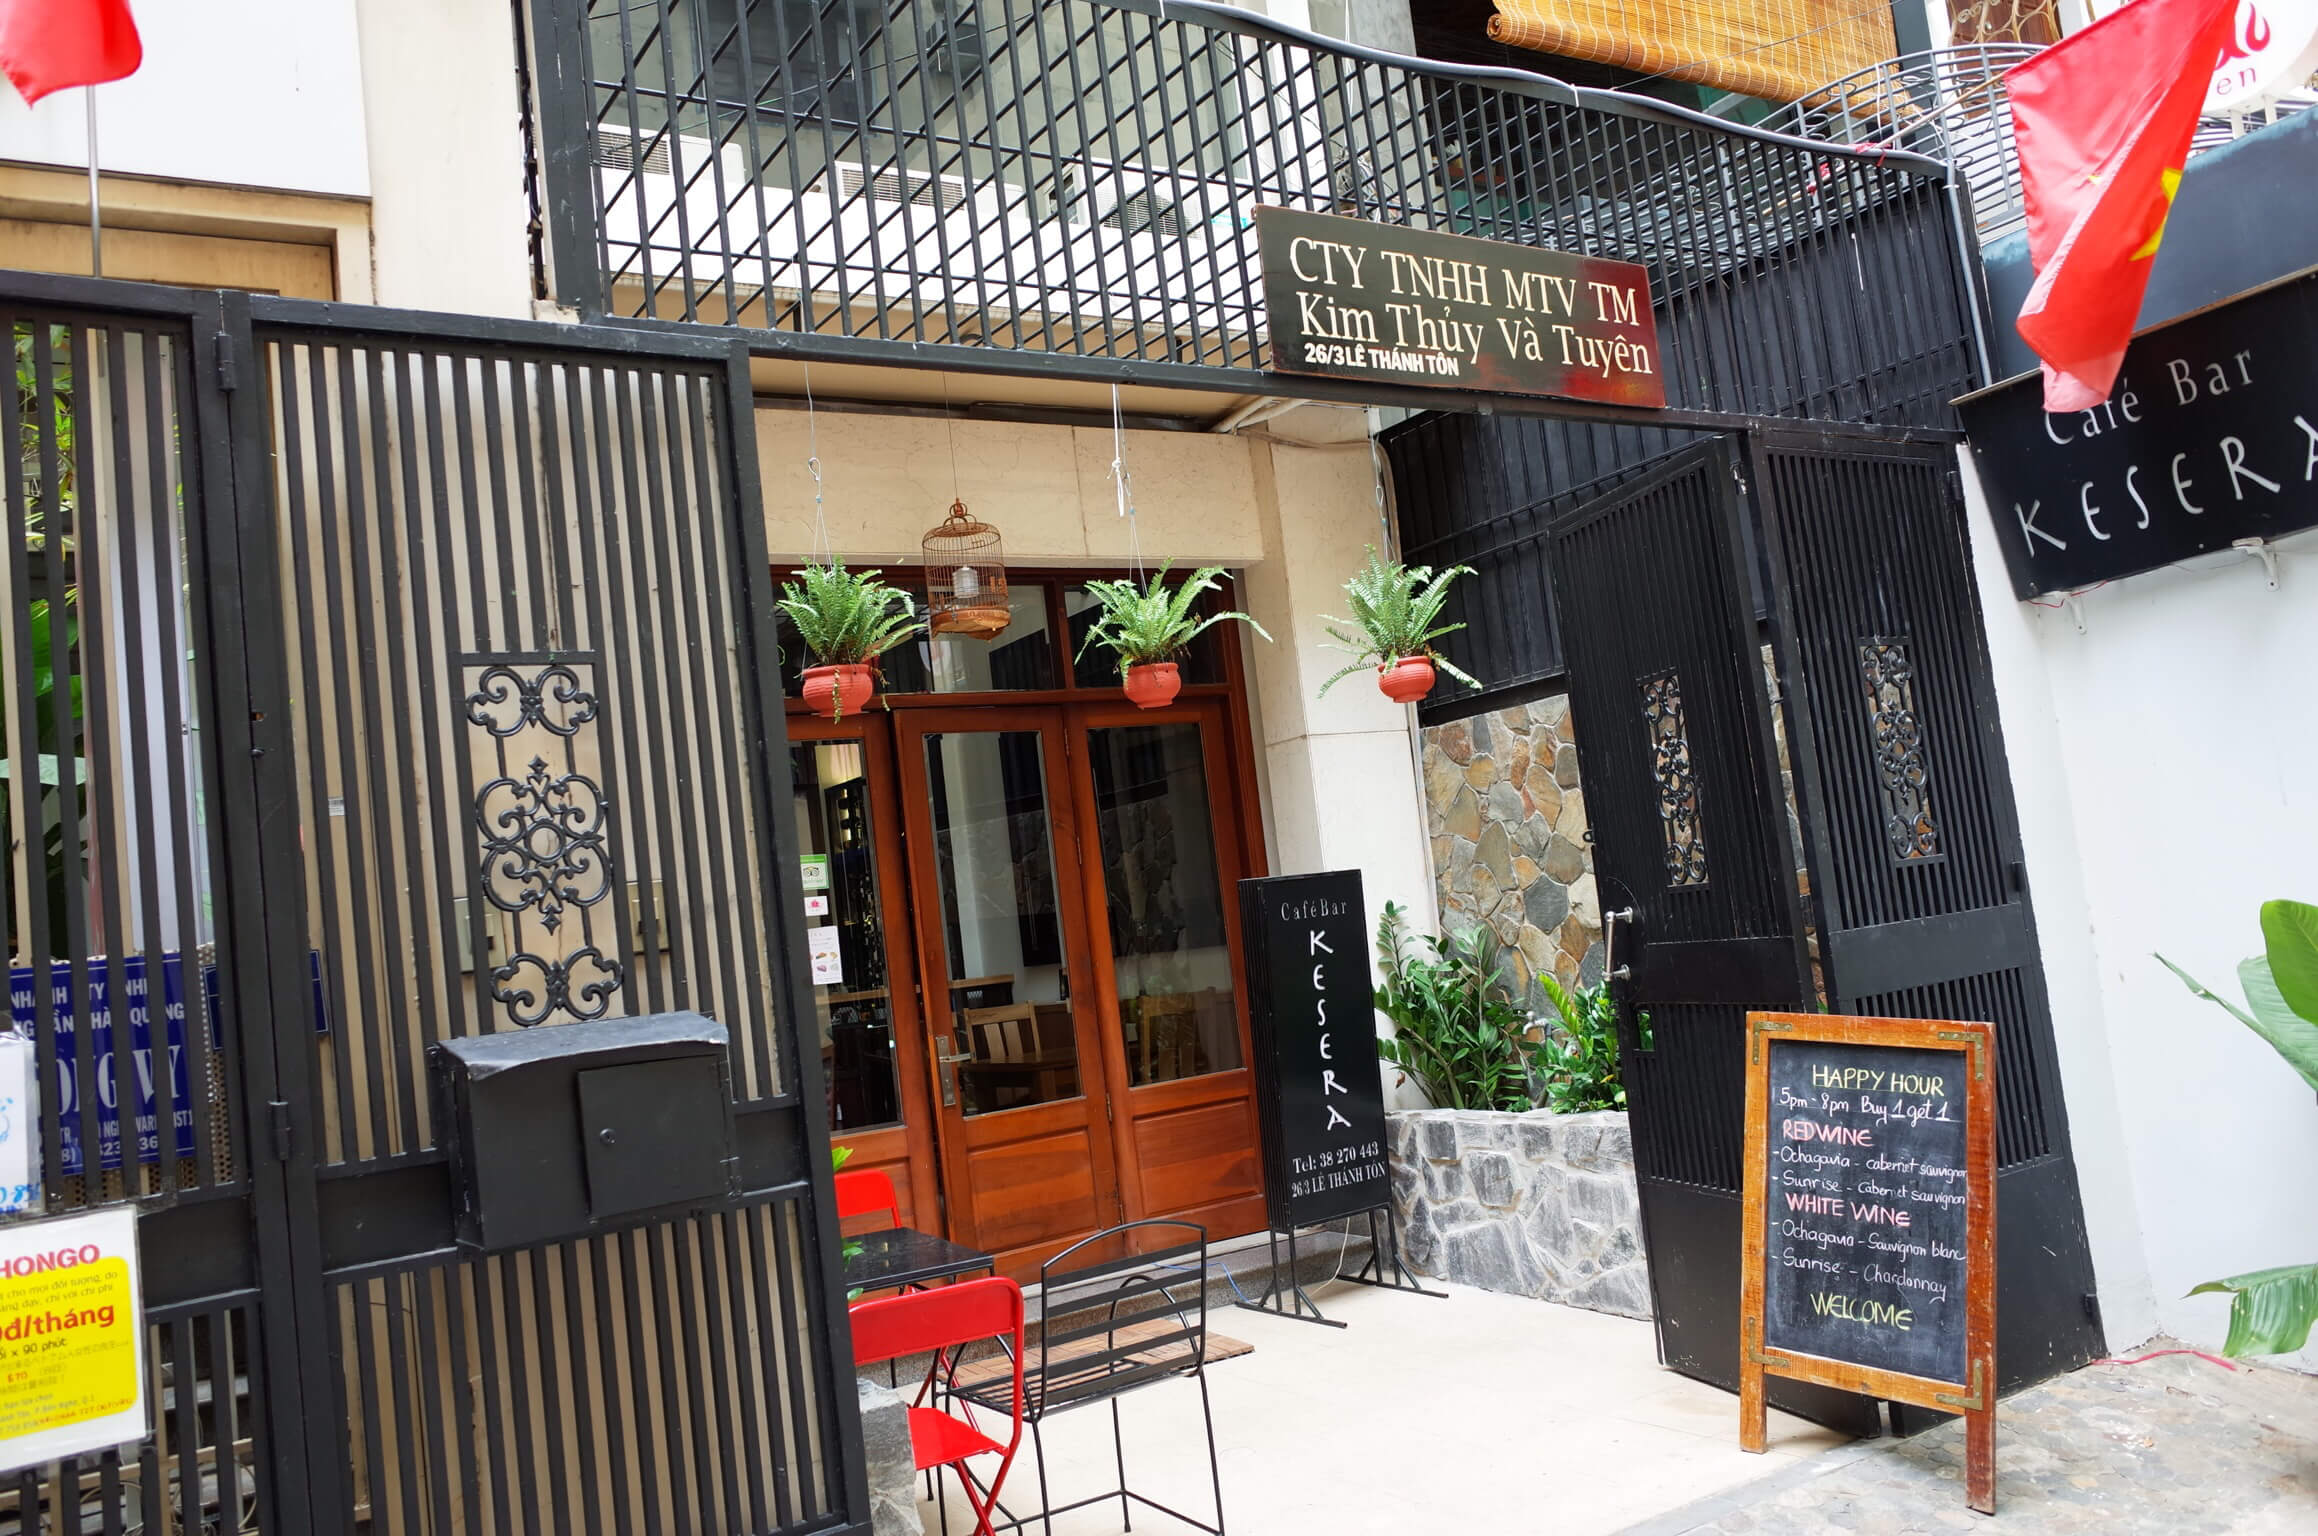 KESERA(ケセラ)   ホーチミンのレタントン通りにある隠れ家的なcafe & bar 朝、昼、晩どの時間帯利用でもおすすめ！